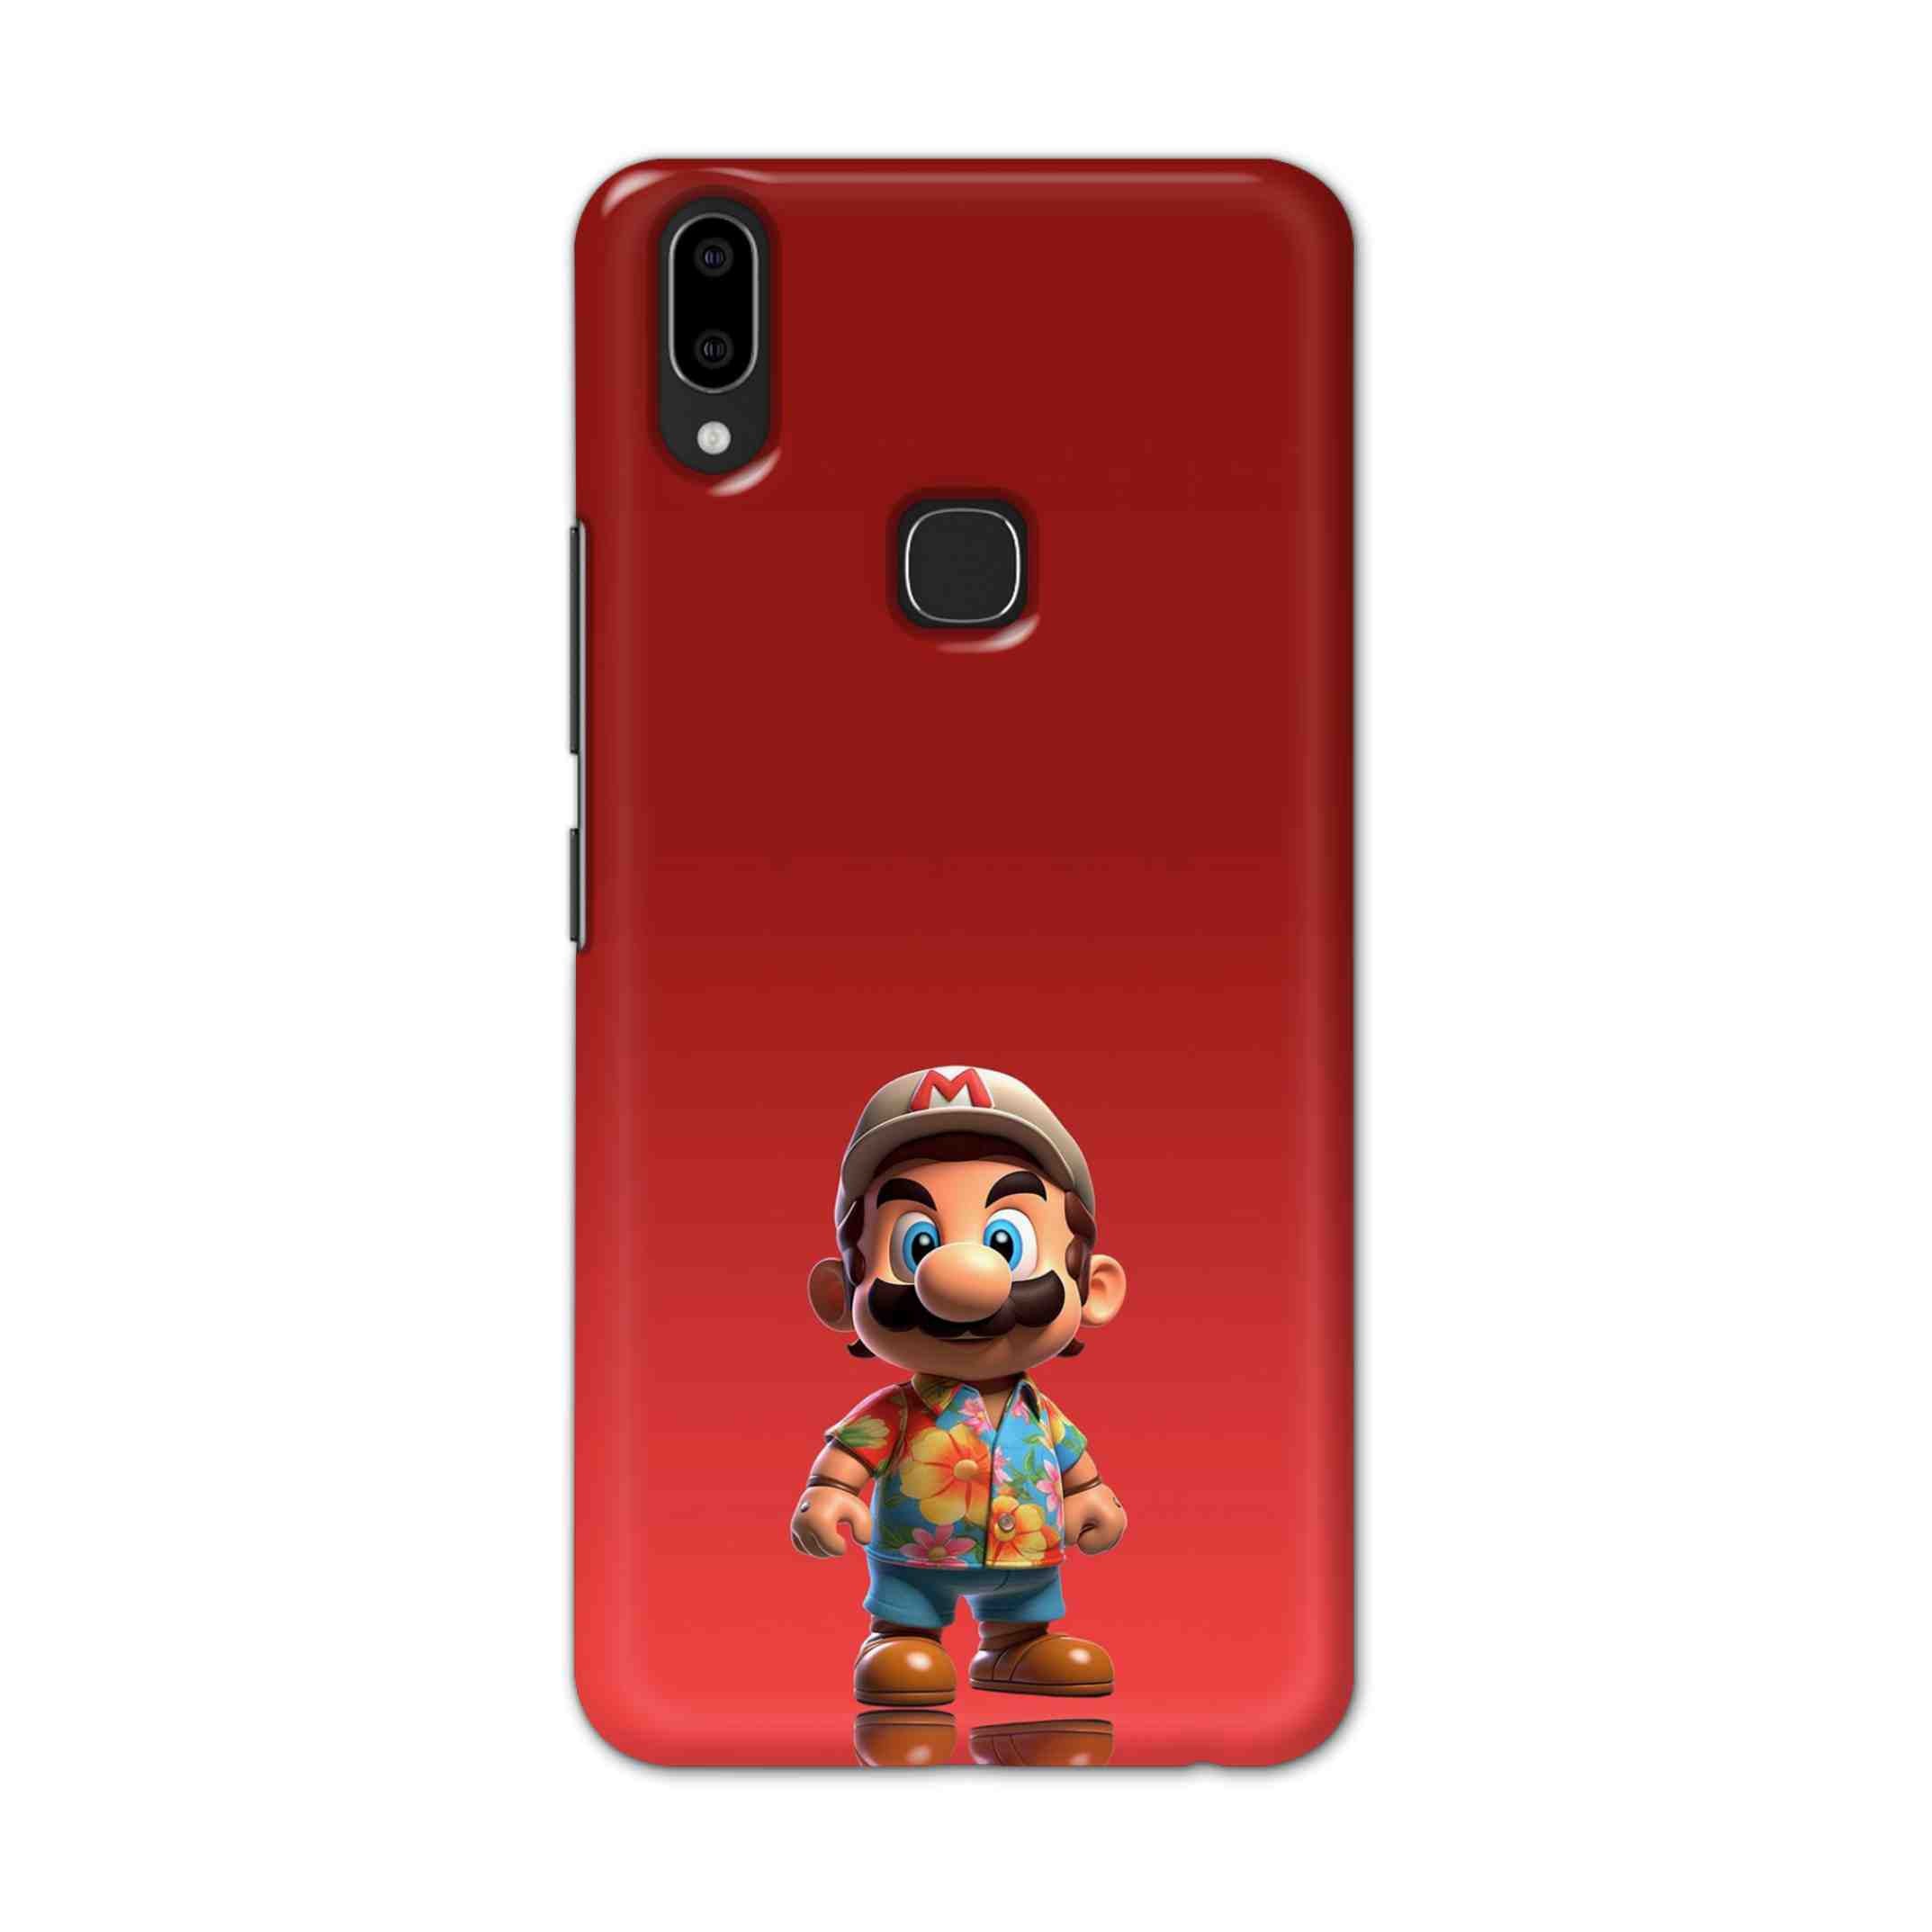 Buy Mario Hard Back Mobile Phone Case Cover For Vivo V9 / V9 Youth Online